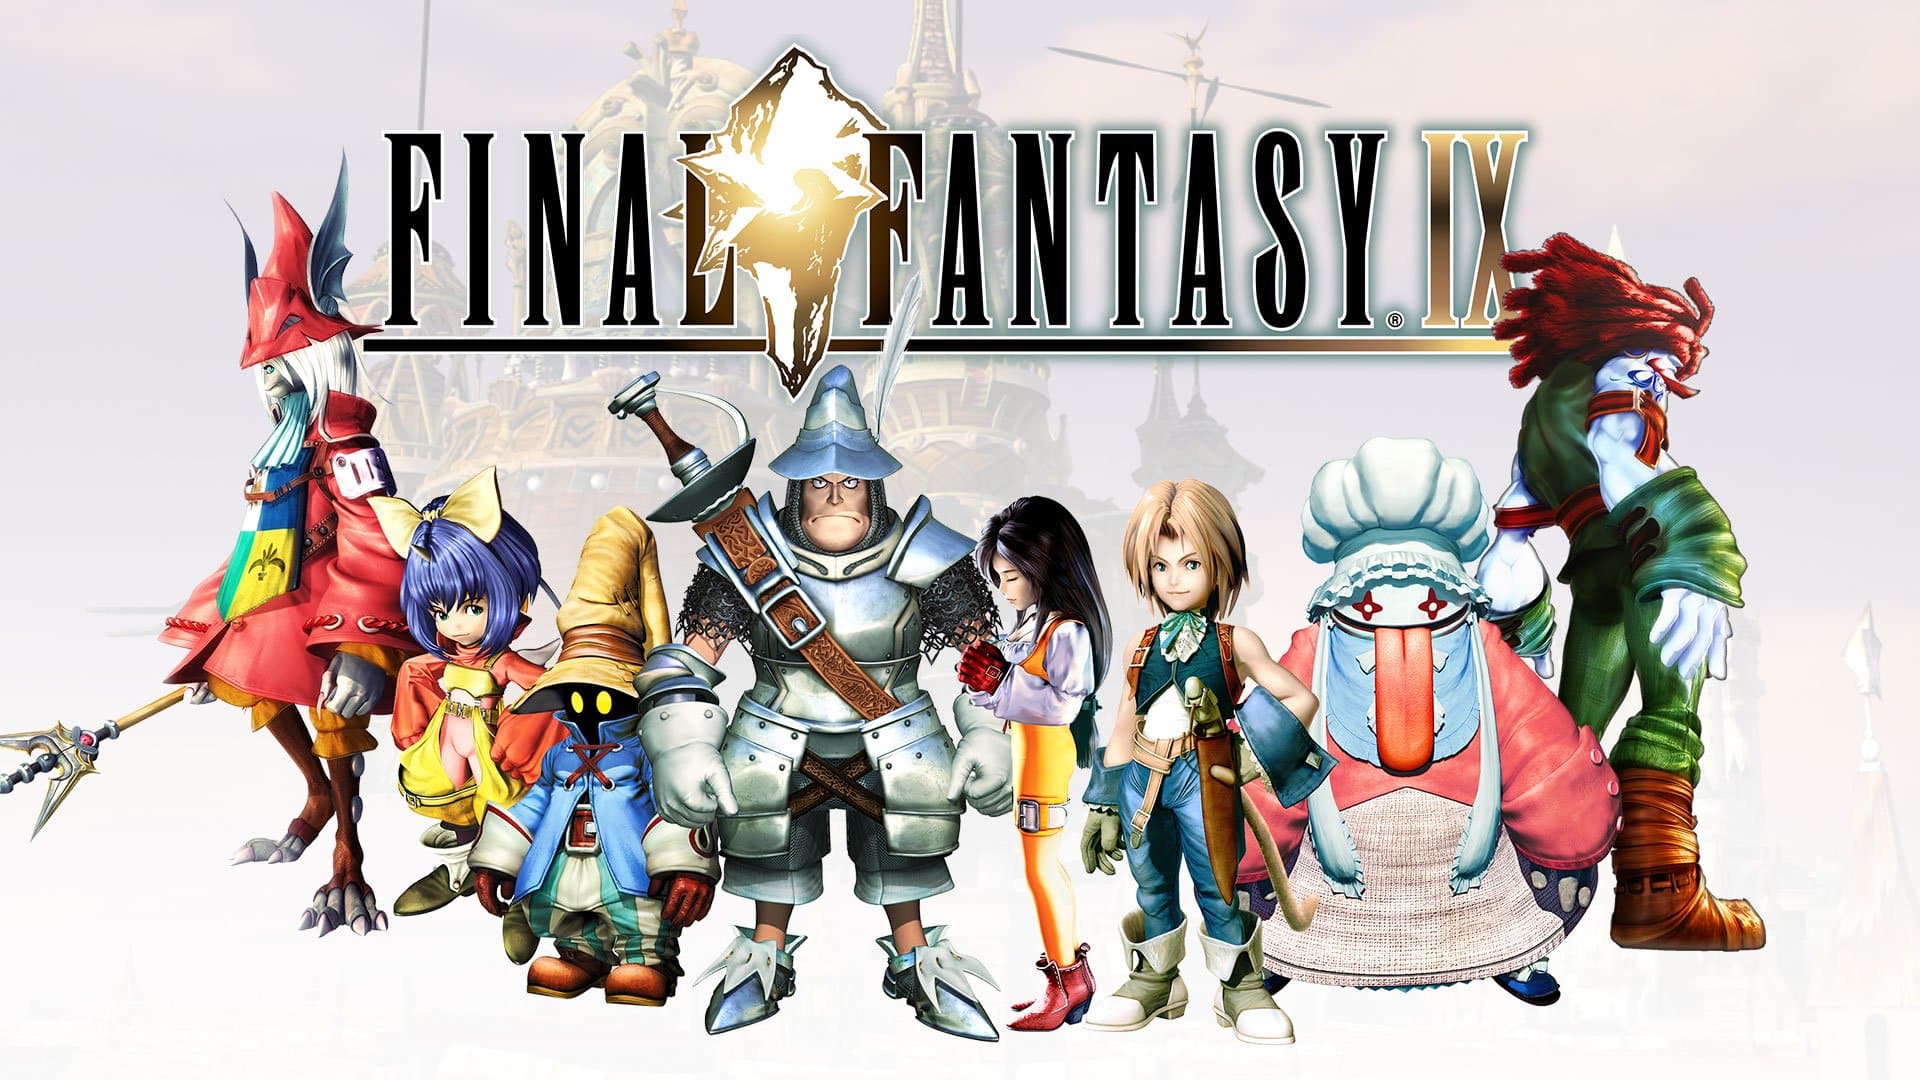 Final Fantasy IX Animated Series in Development